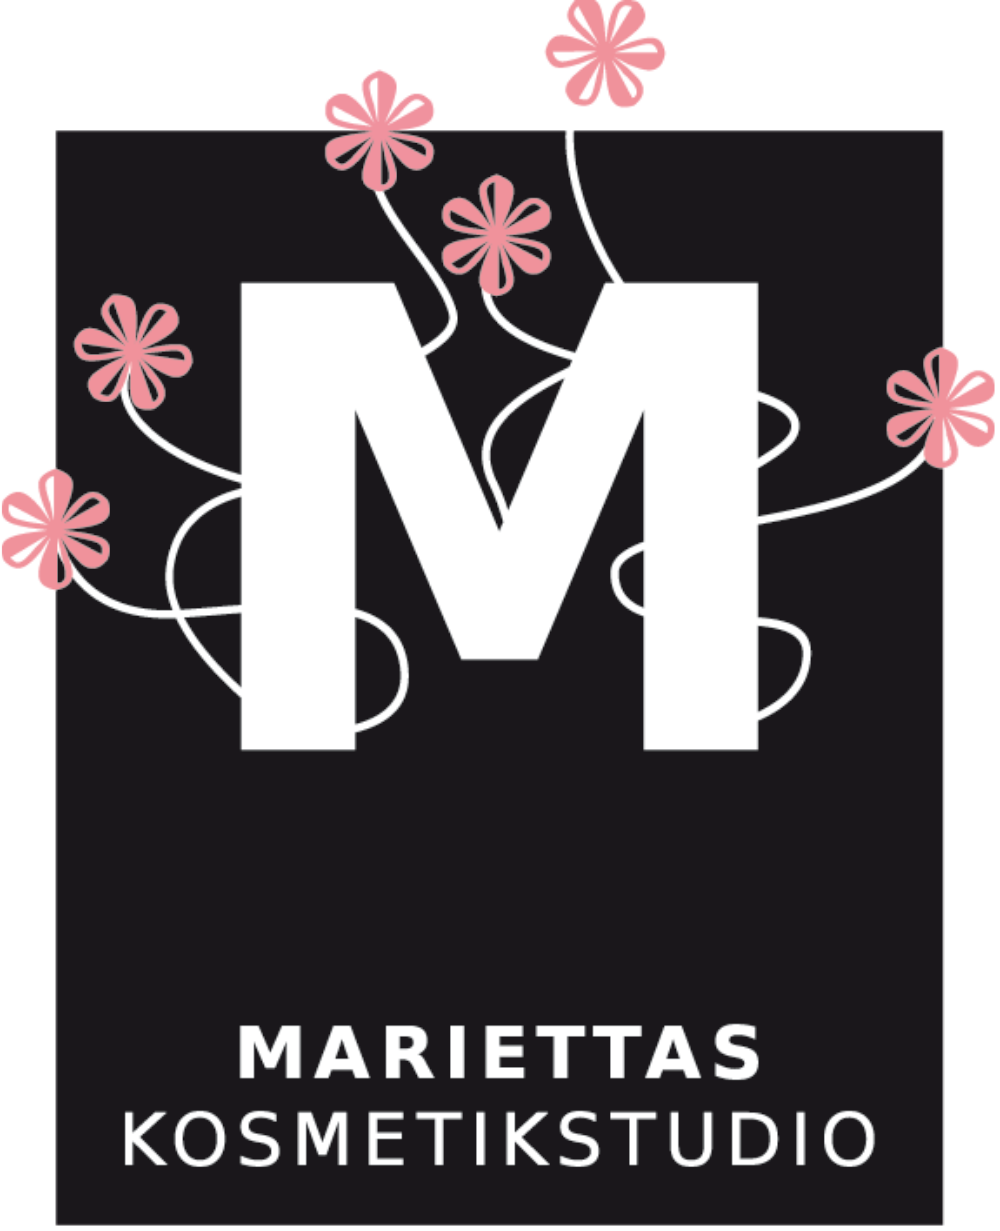 Mariettas Kosmetikstudio